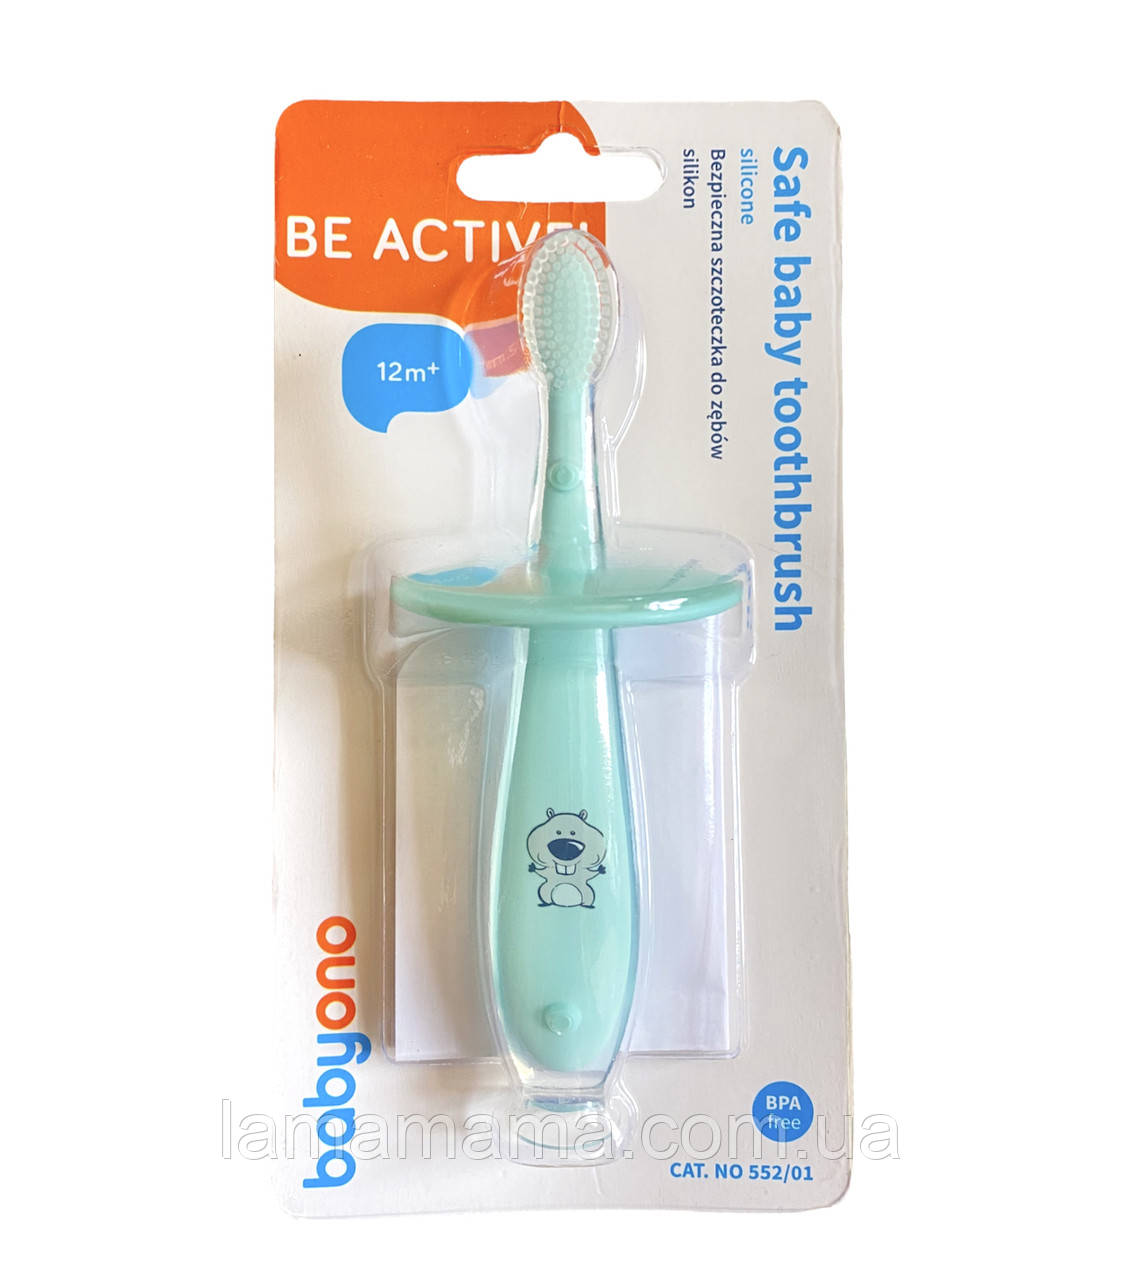 Безпечна зубна щітка з обмежувачем на присосці 12М+ Ментол BabyOno